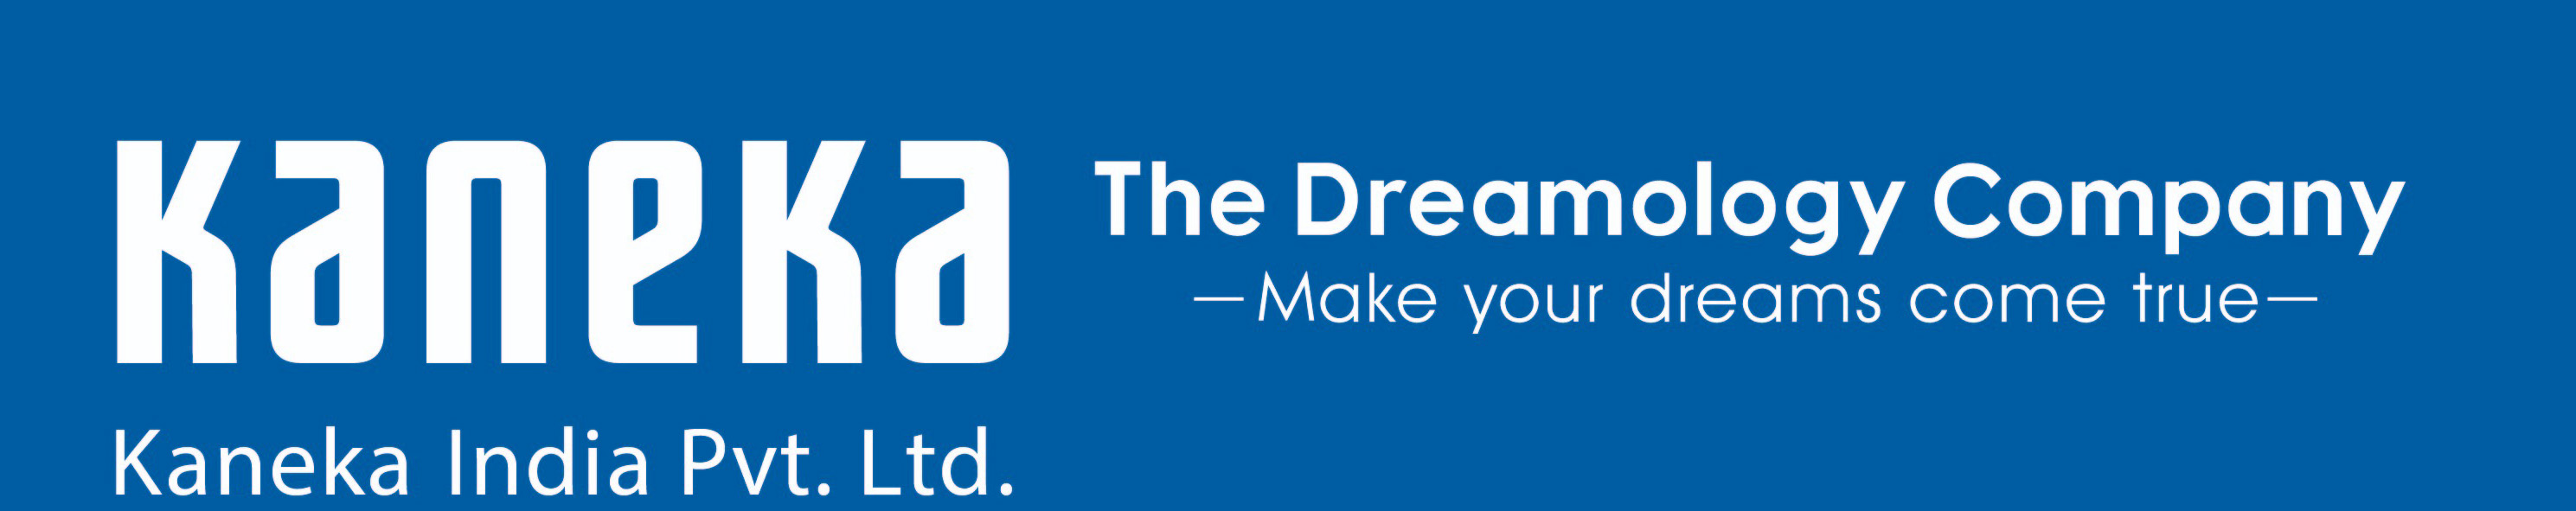 Kaneka India Pvt. Ltb. The Dreamology Company - Make your doreams come true -